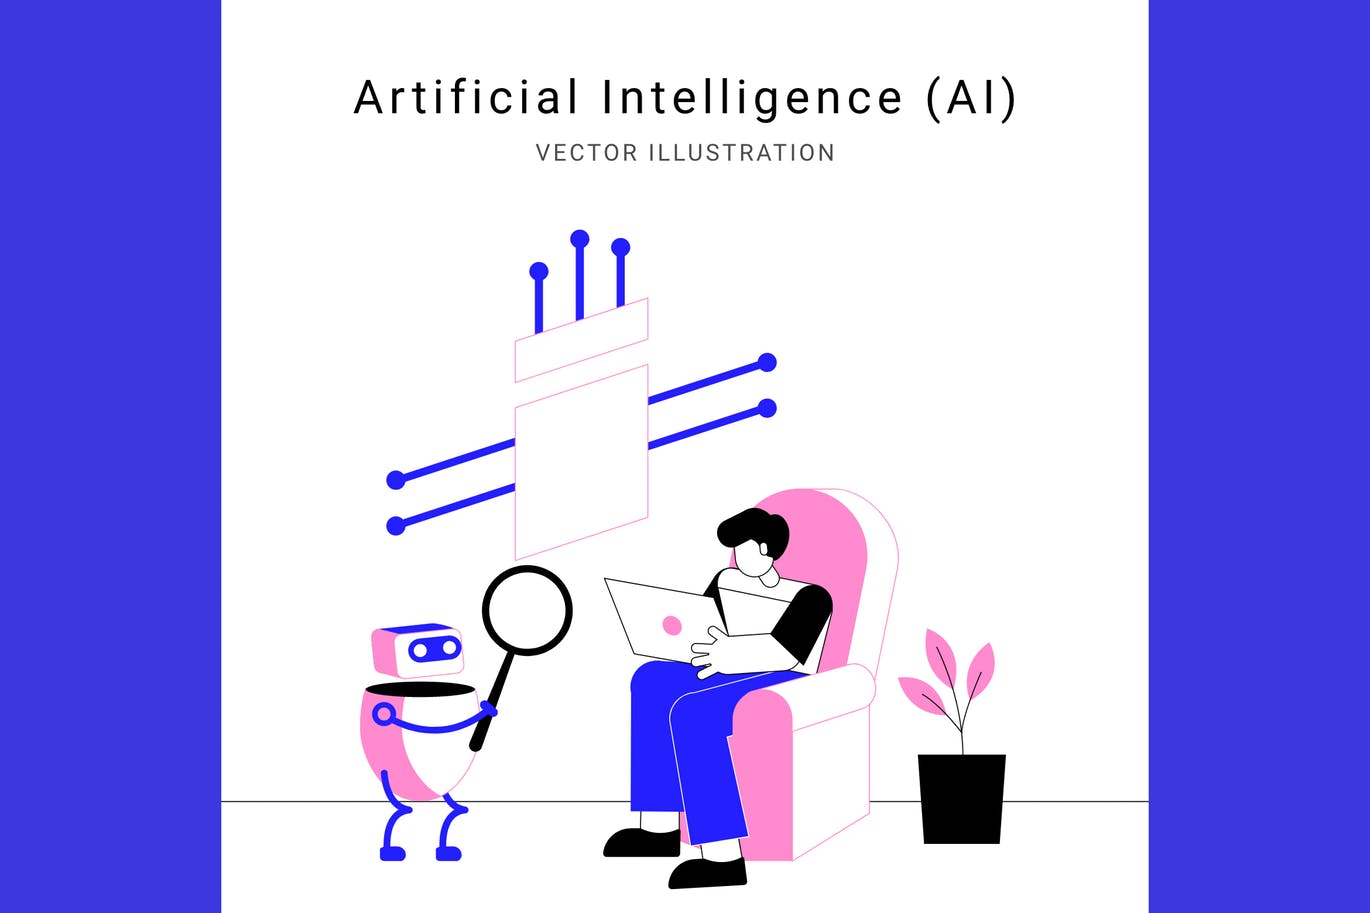 人工智能主题矢量插画素材 Artificial Intelligence (AI) Vector Illustration插图